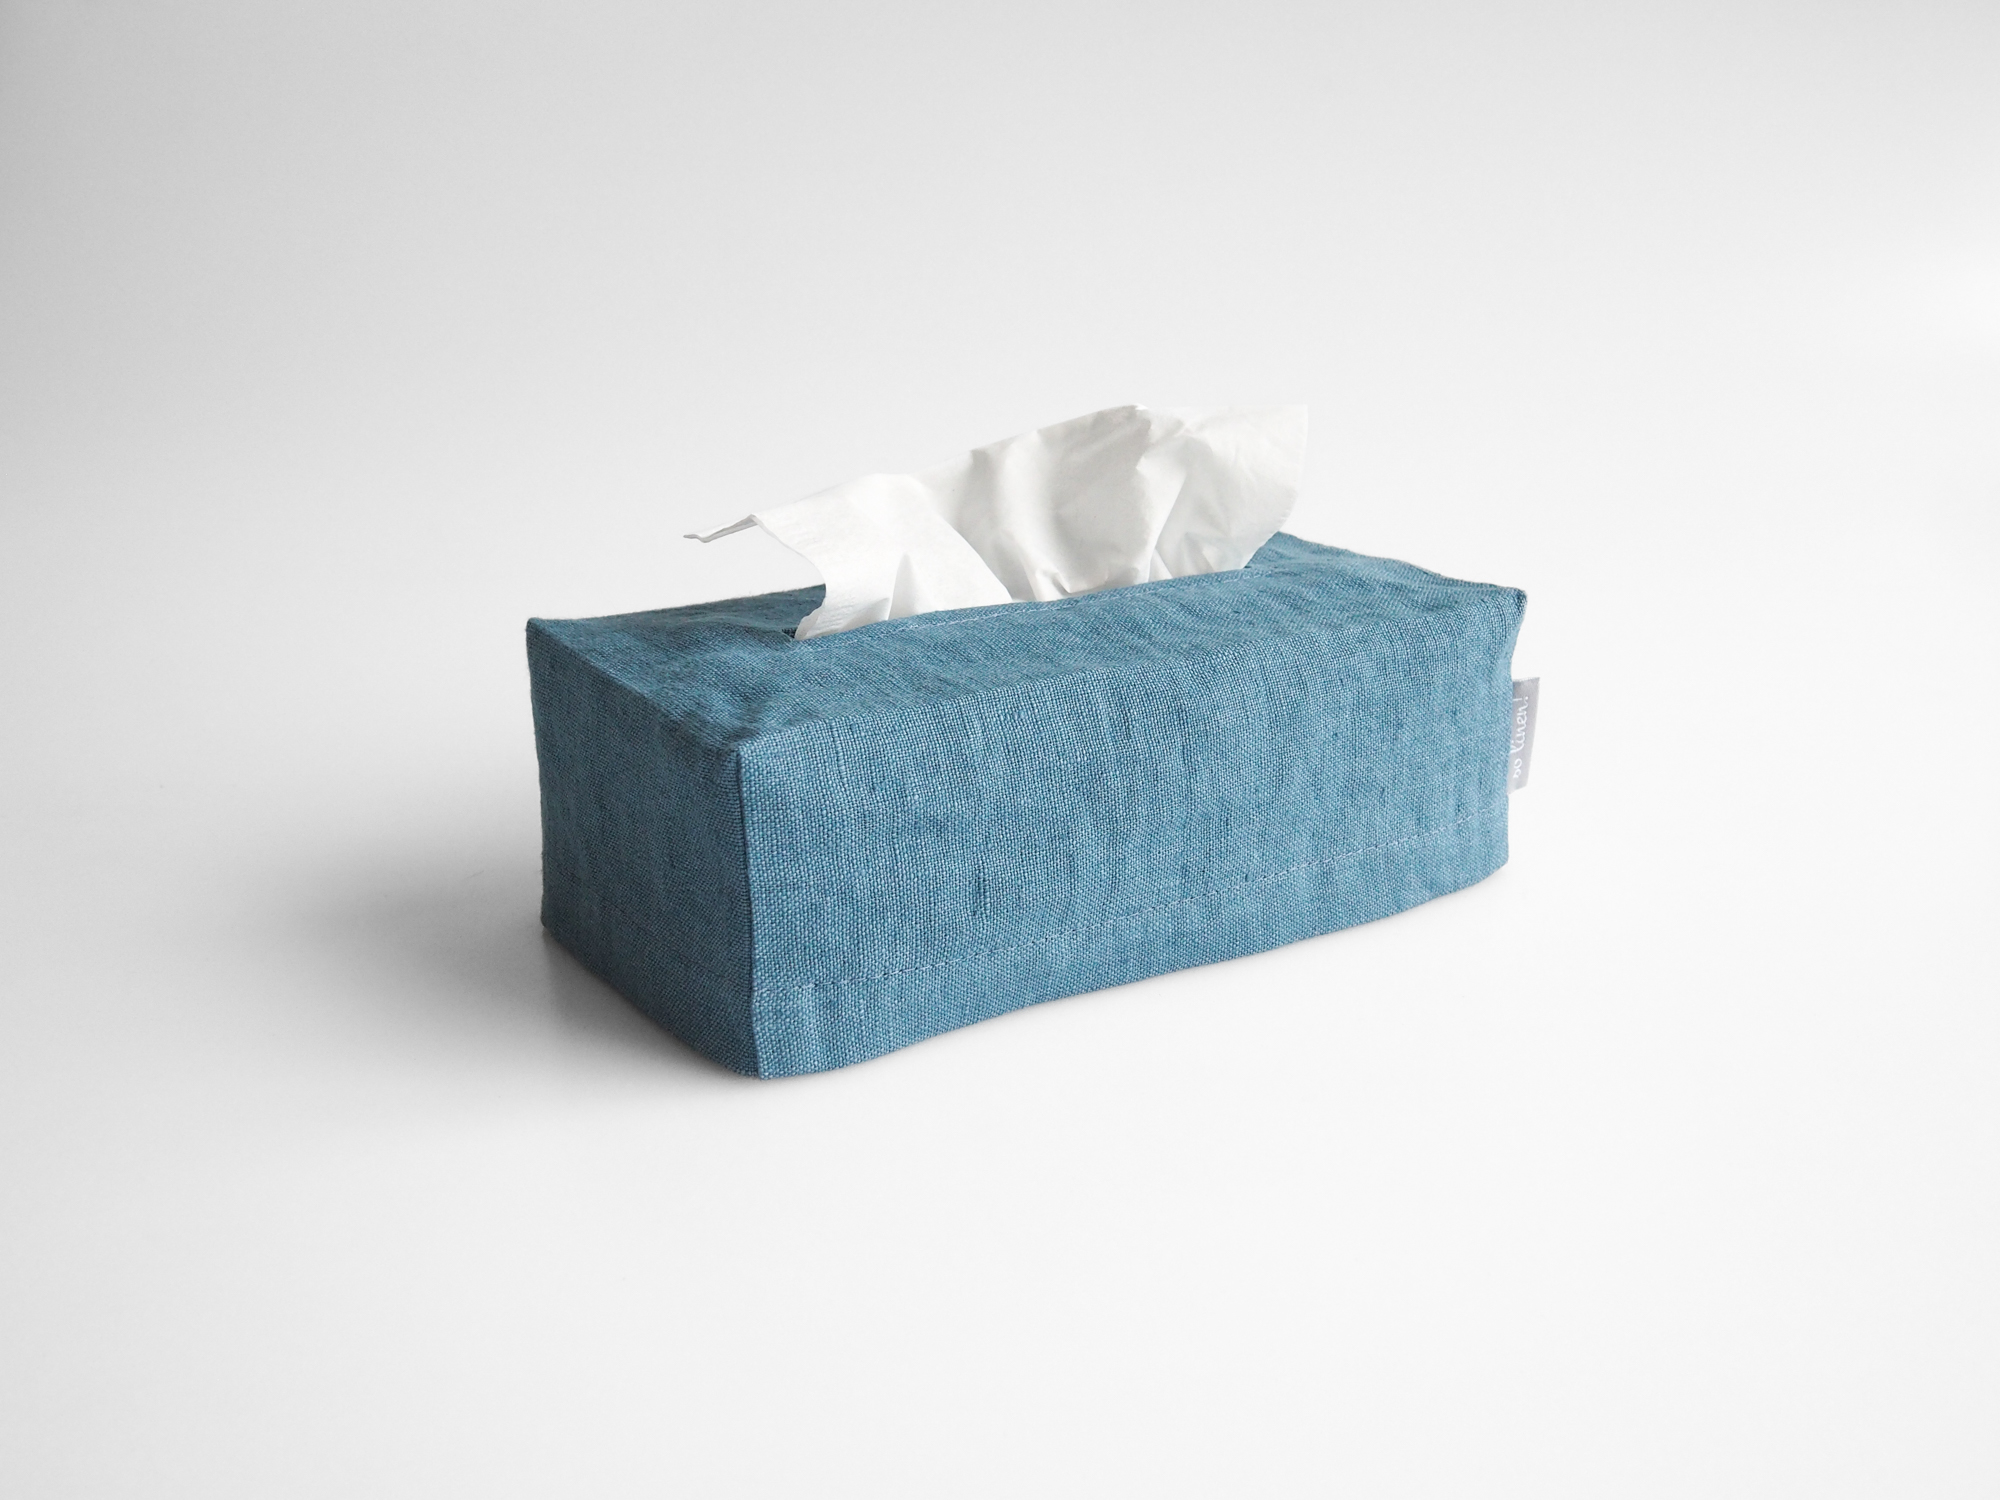 Blue linen tissue box cover